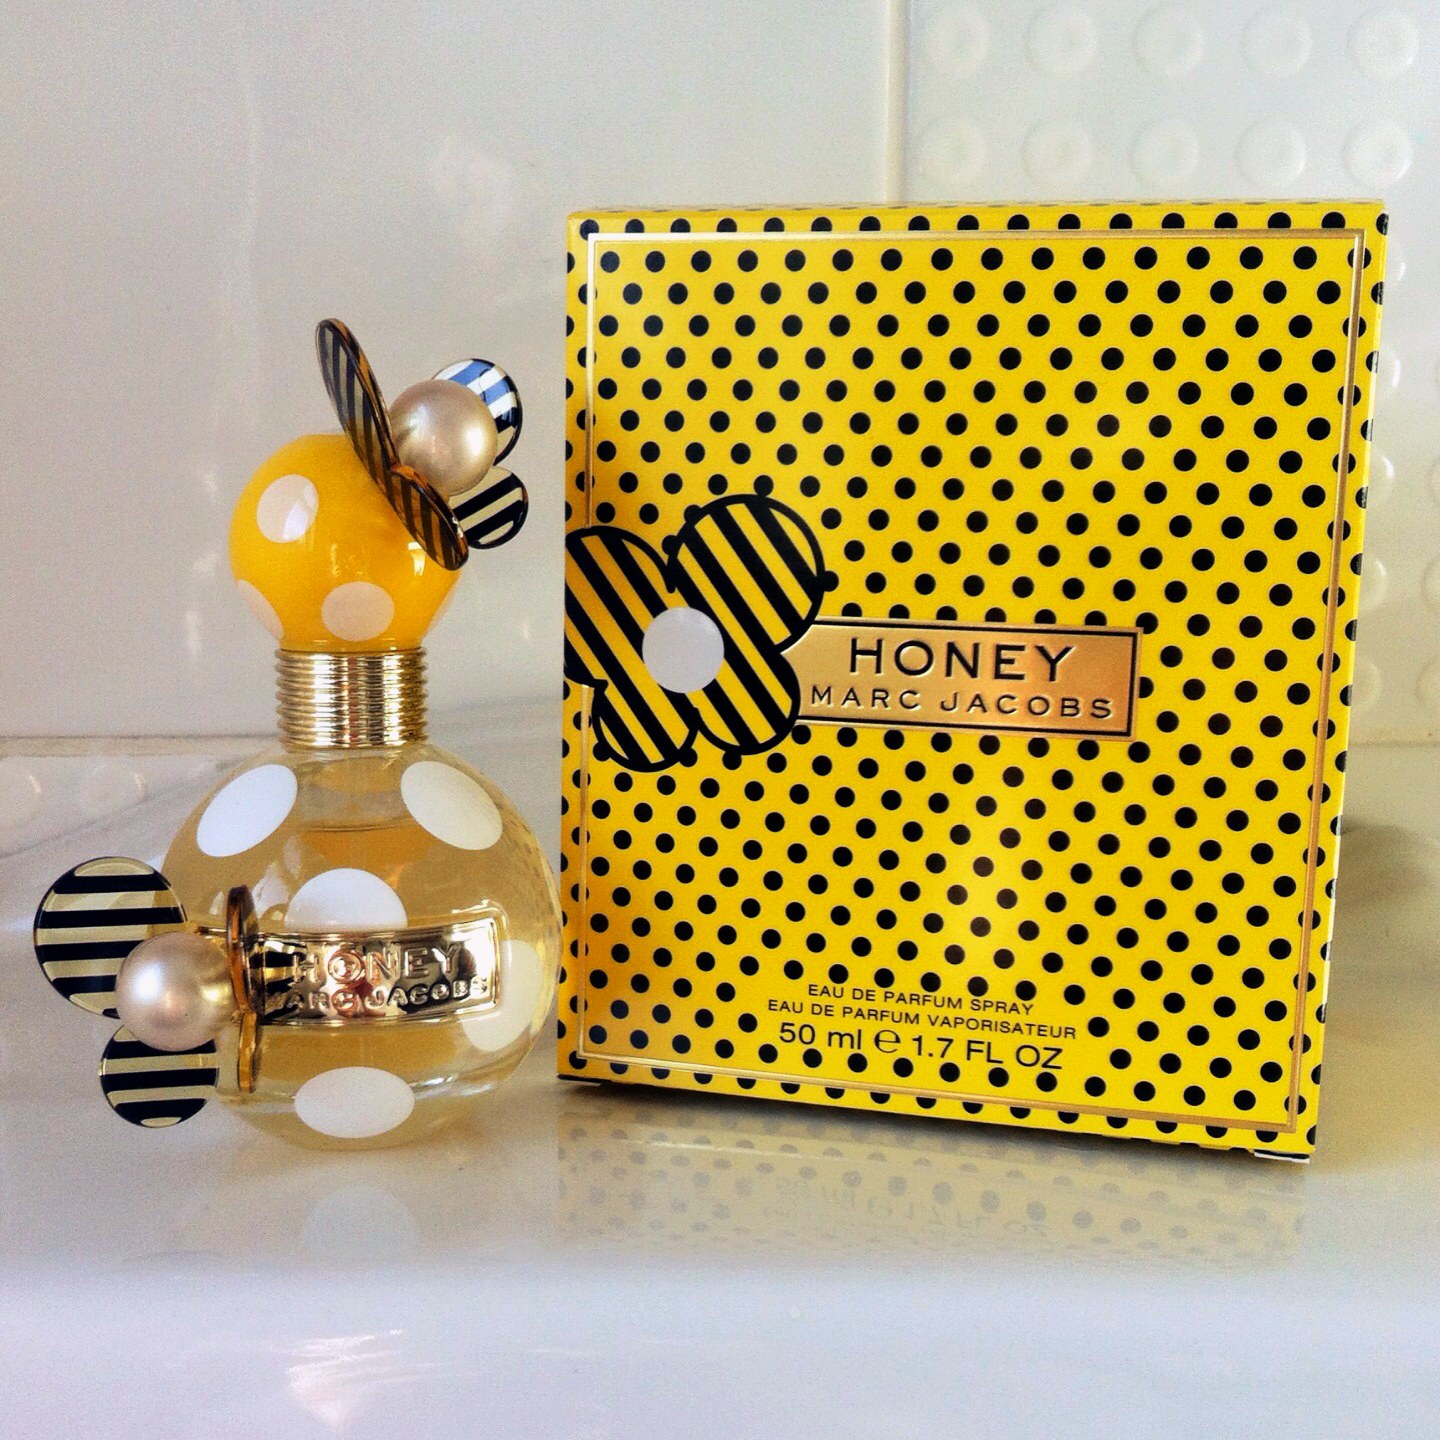 Marc Jacobs Honey Eau De Parfume | As Told by Tamara